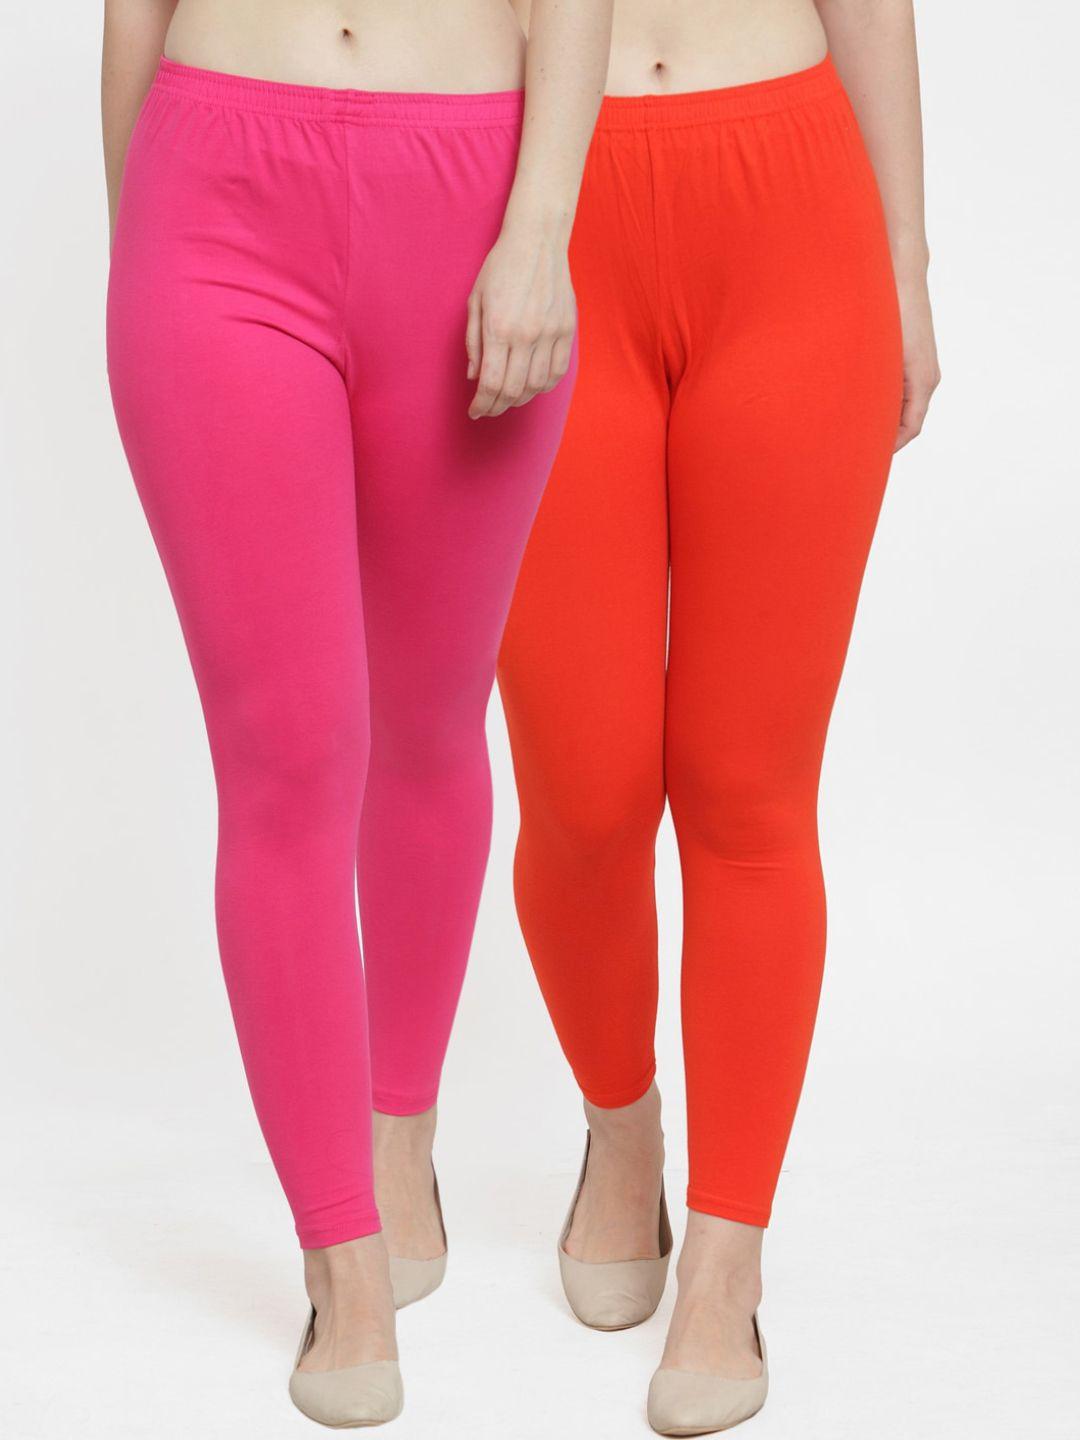 gracit-women-set-of-2-pink-&-orange-solid-ankle-length-leggings